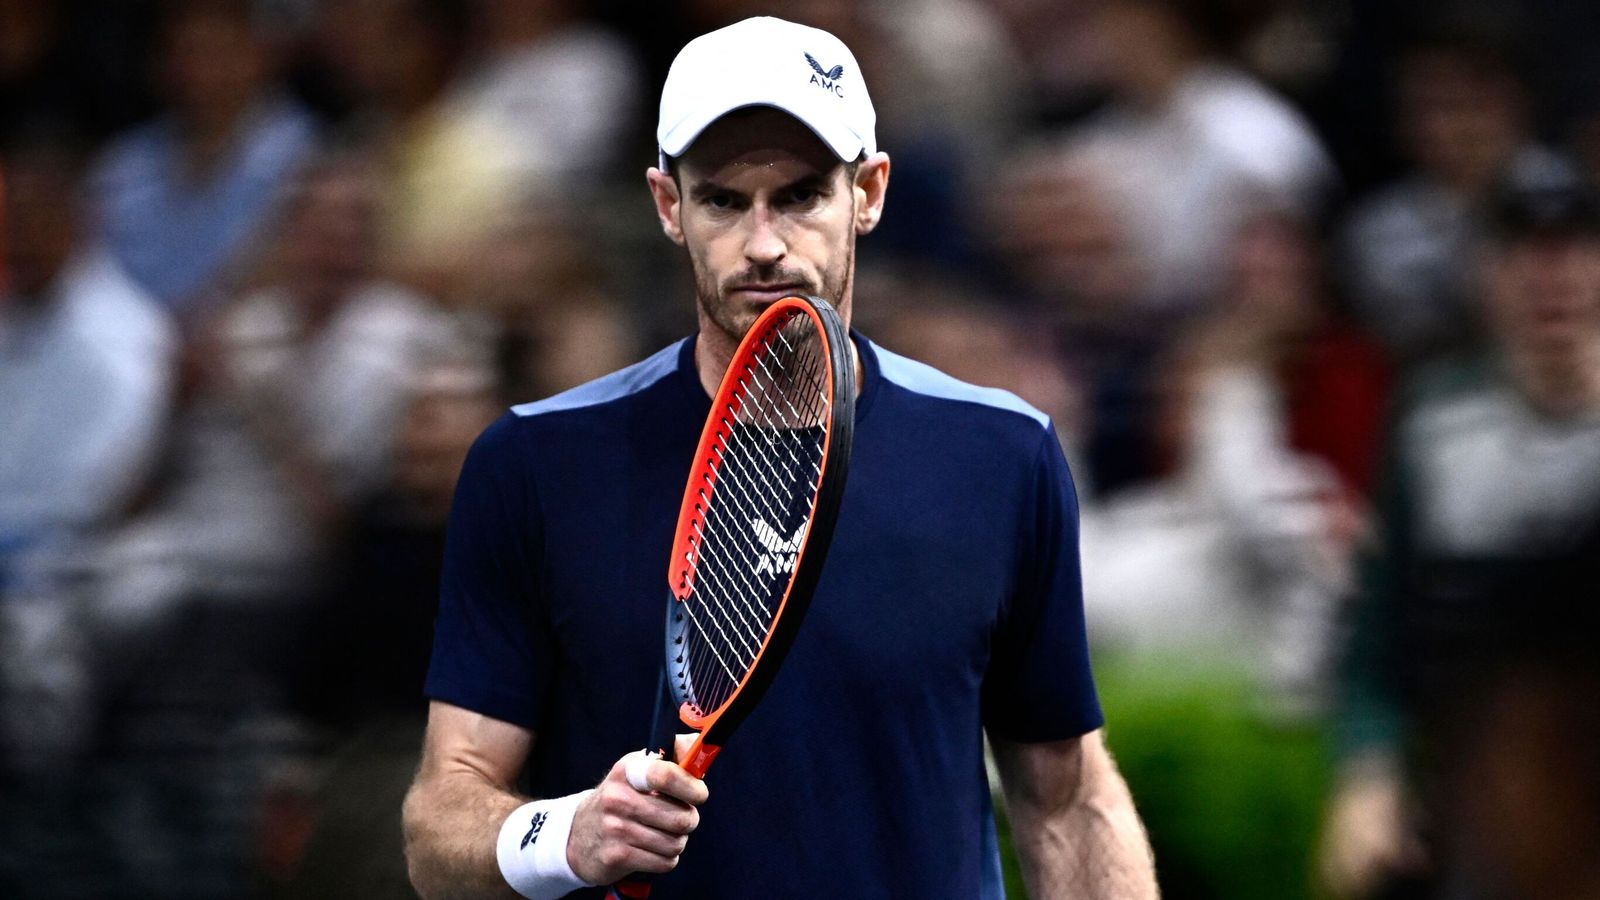 Andy Murray utrpěl krutou třísetovou porážku proti Alex de Minaur na Paris Masters |  Tenisové novinky